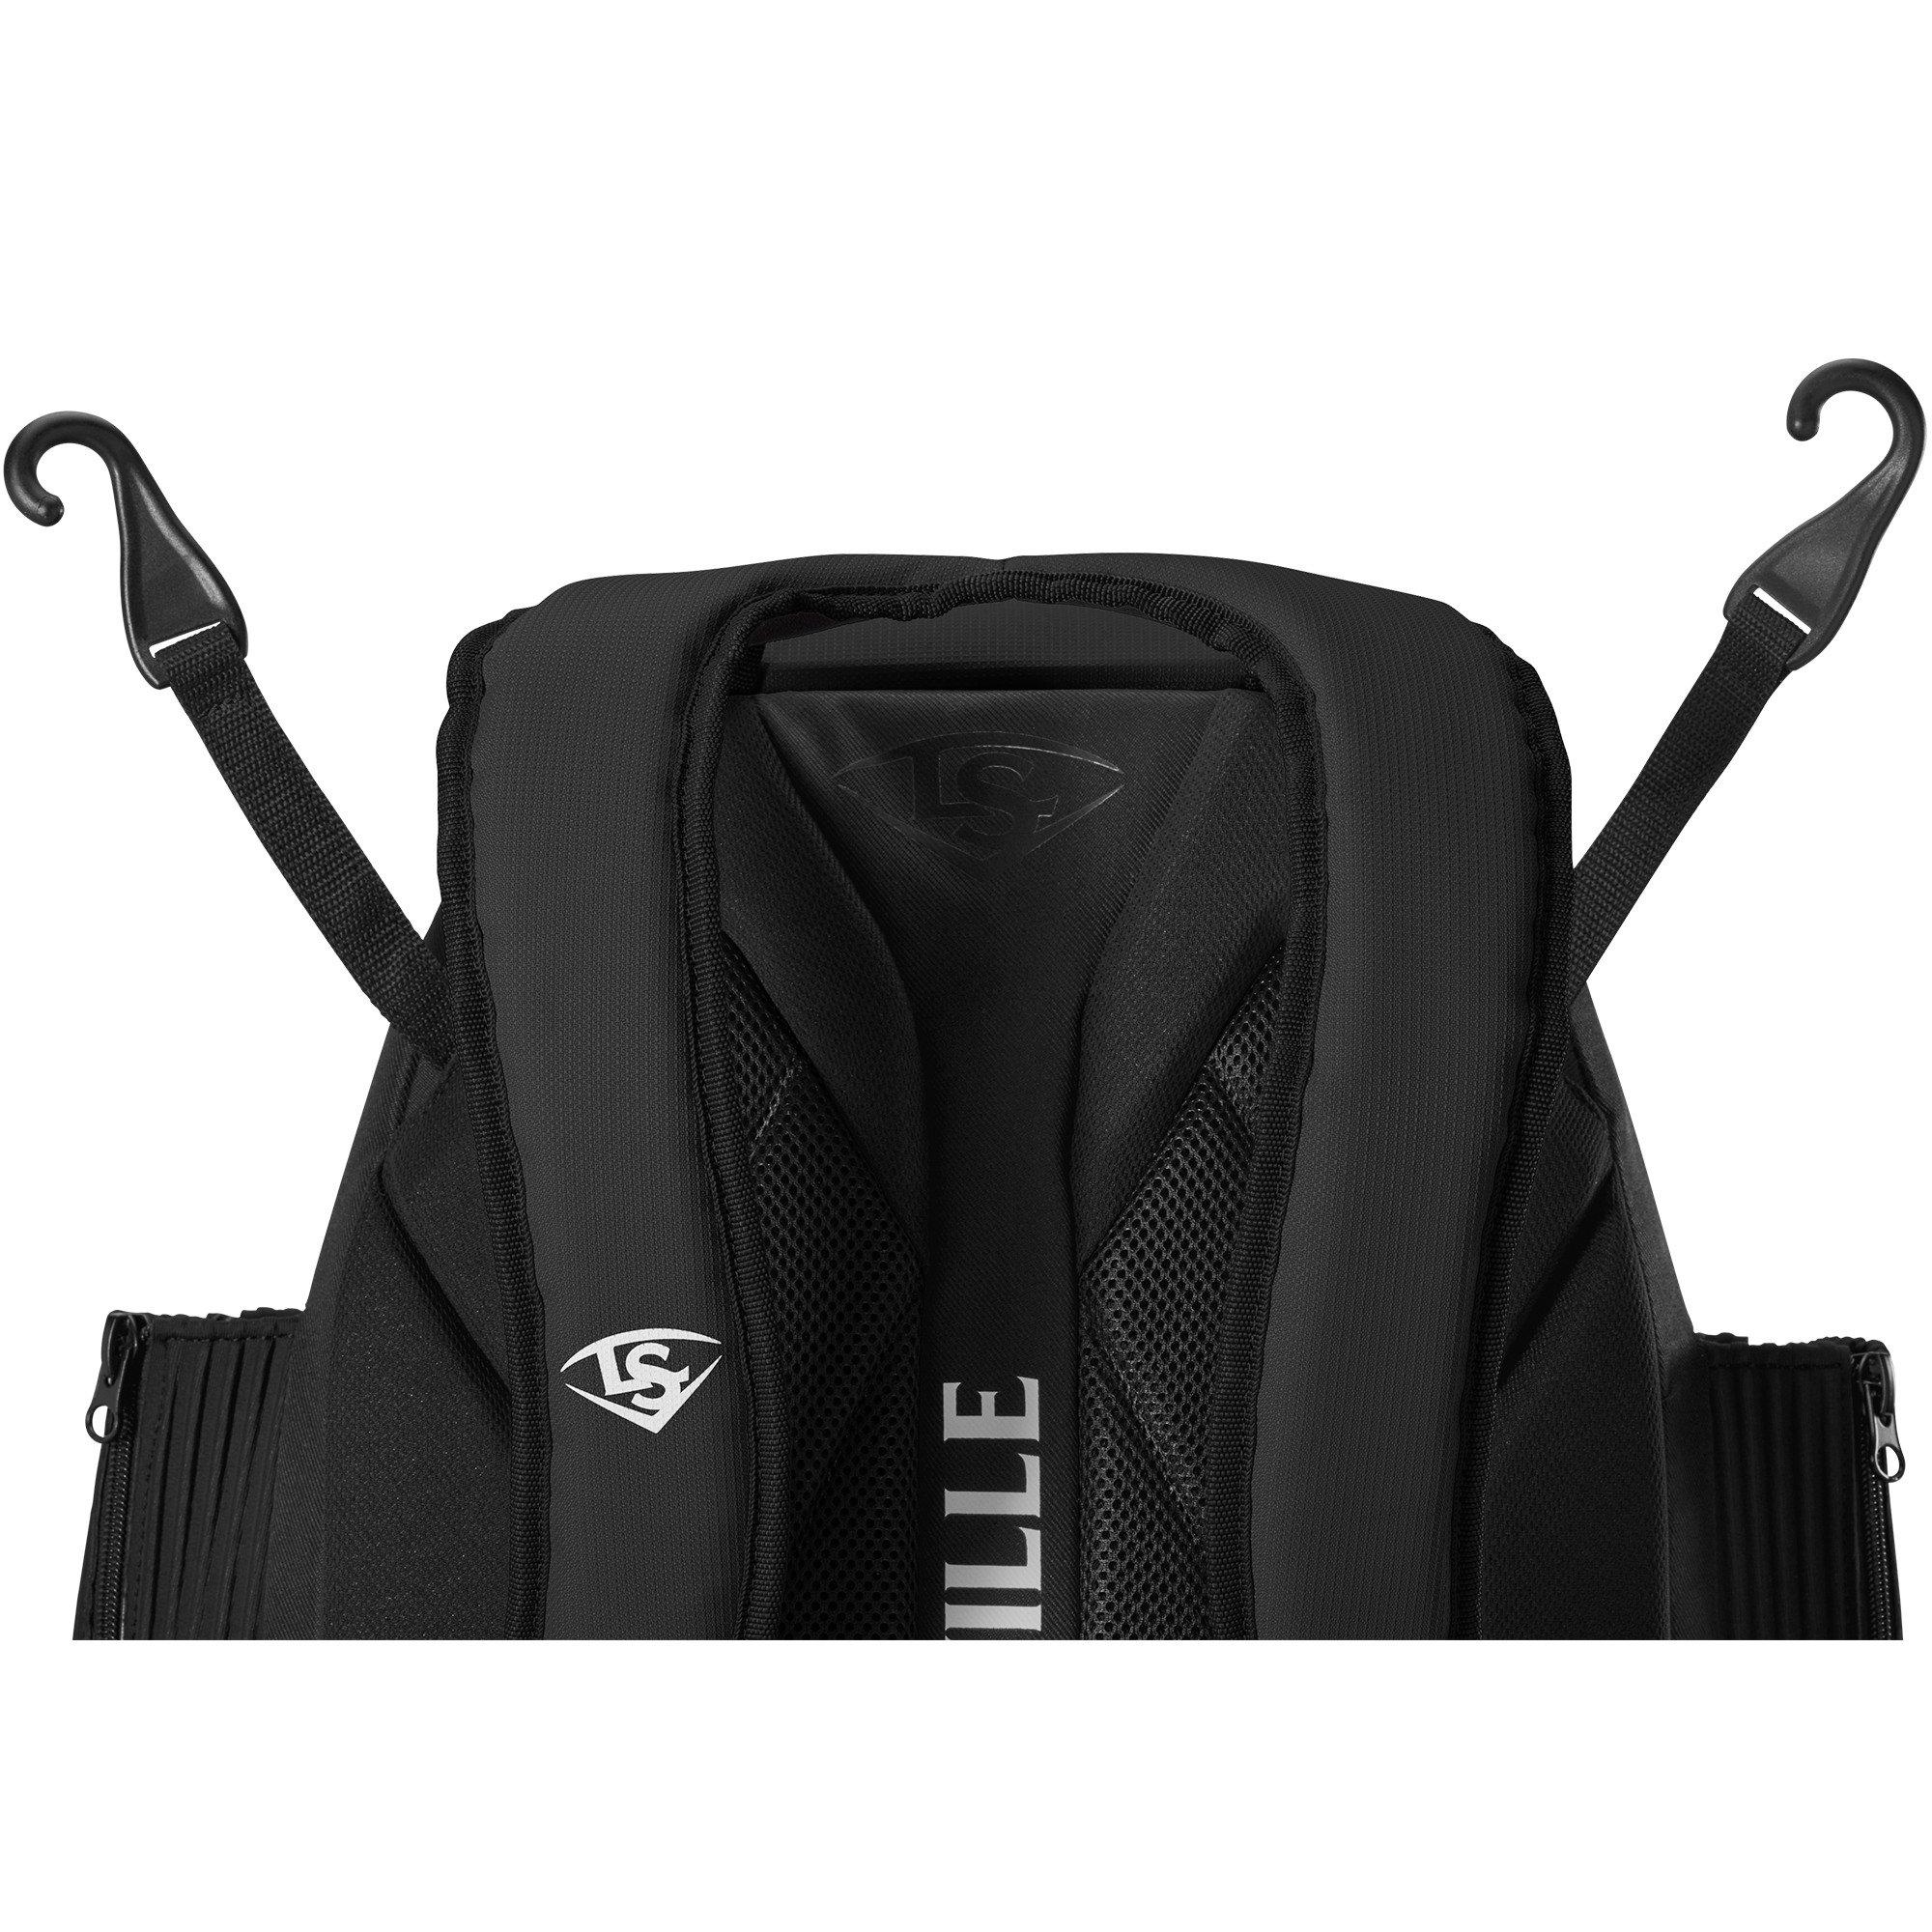 MLB Louisville Slugger Series 5 Stick Backpack